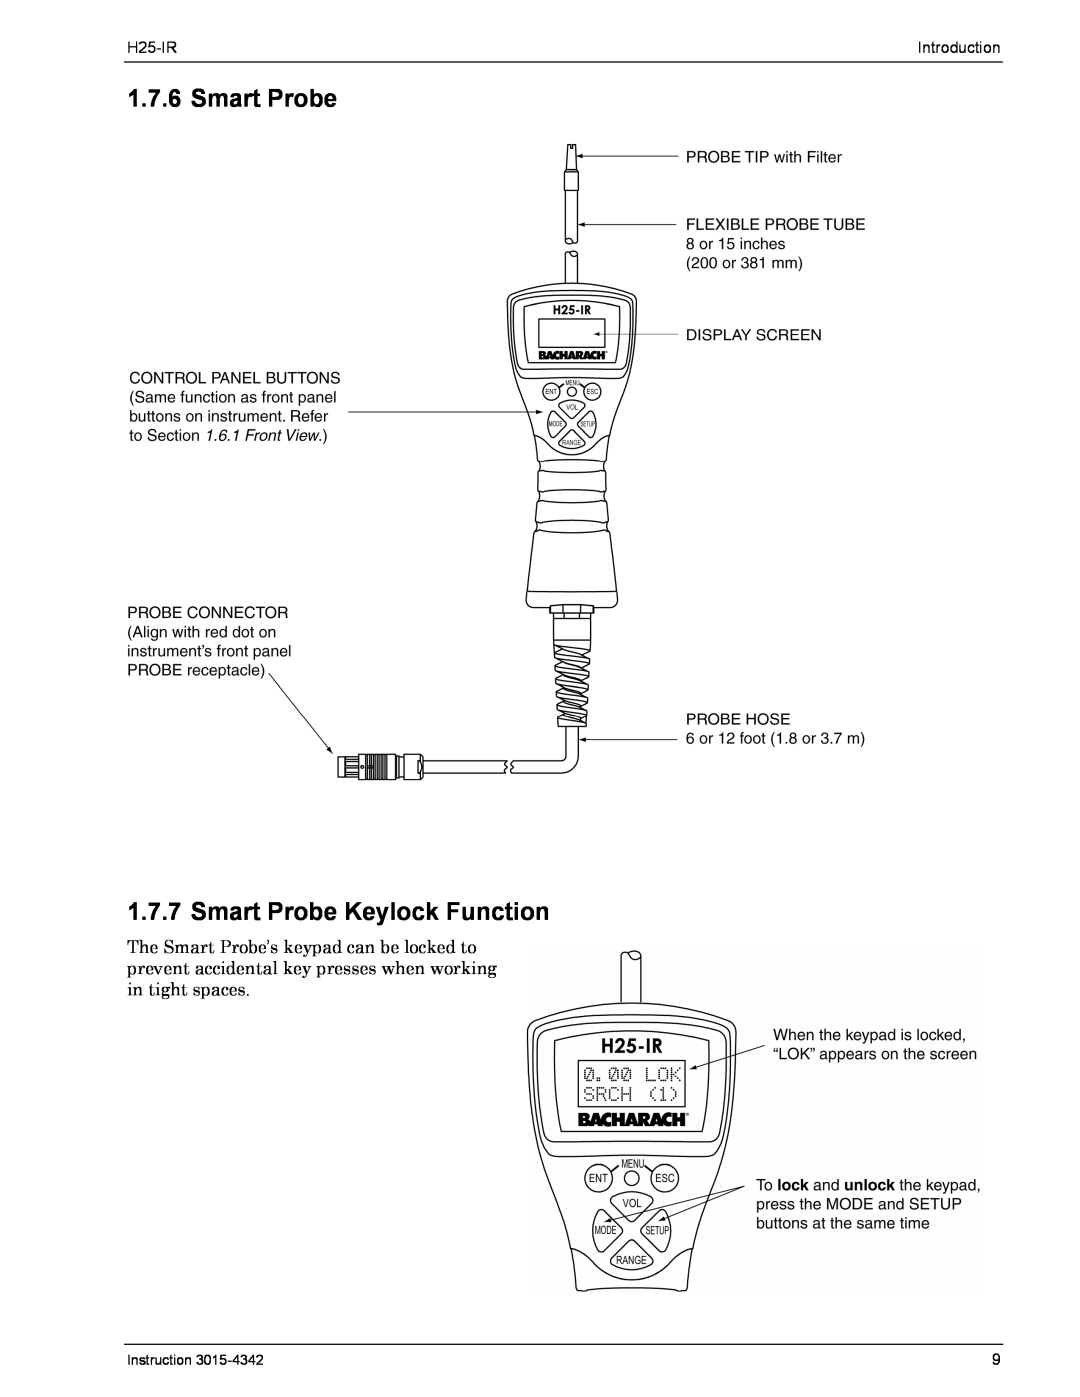 Bacharach H25-IR manual Smart Probe Keylock Function, Introduction 